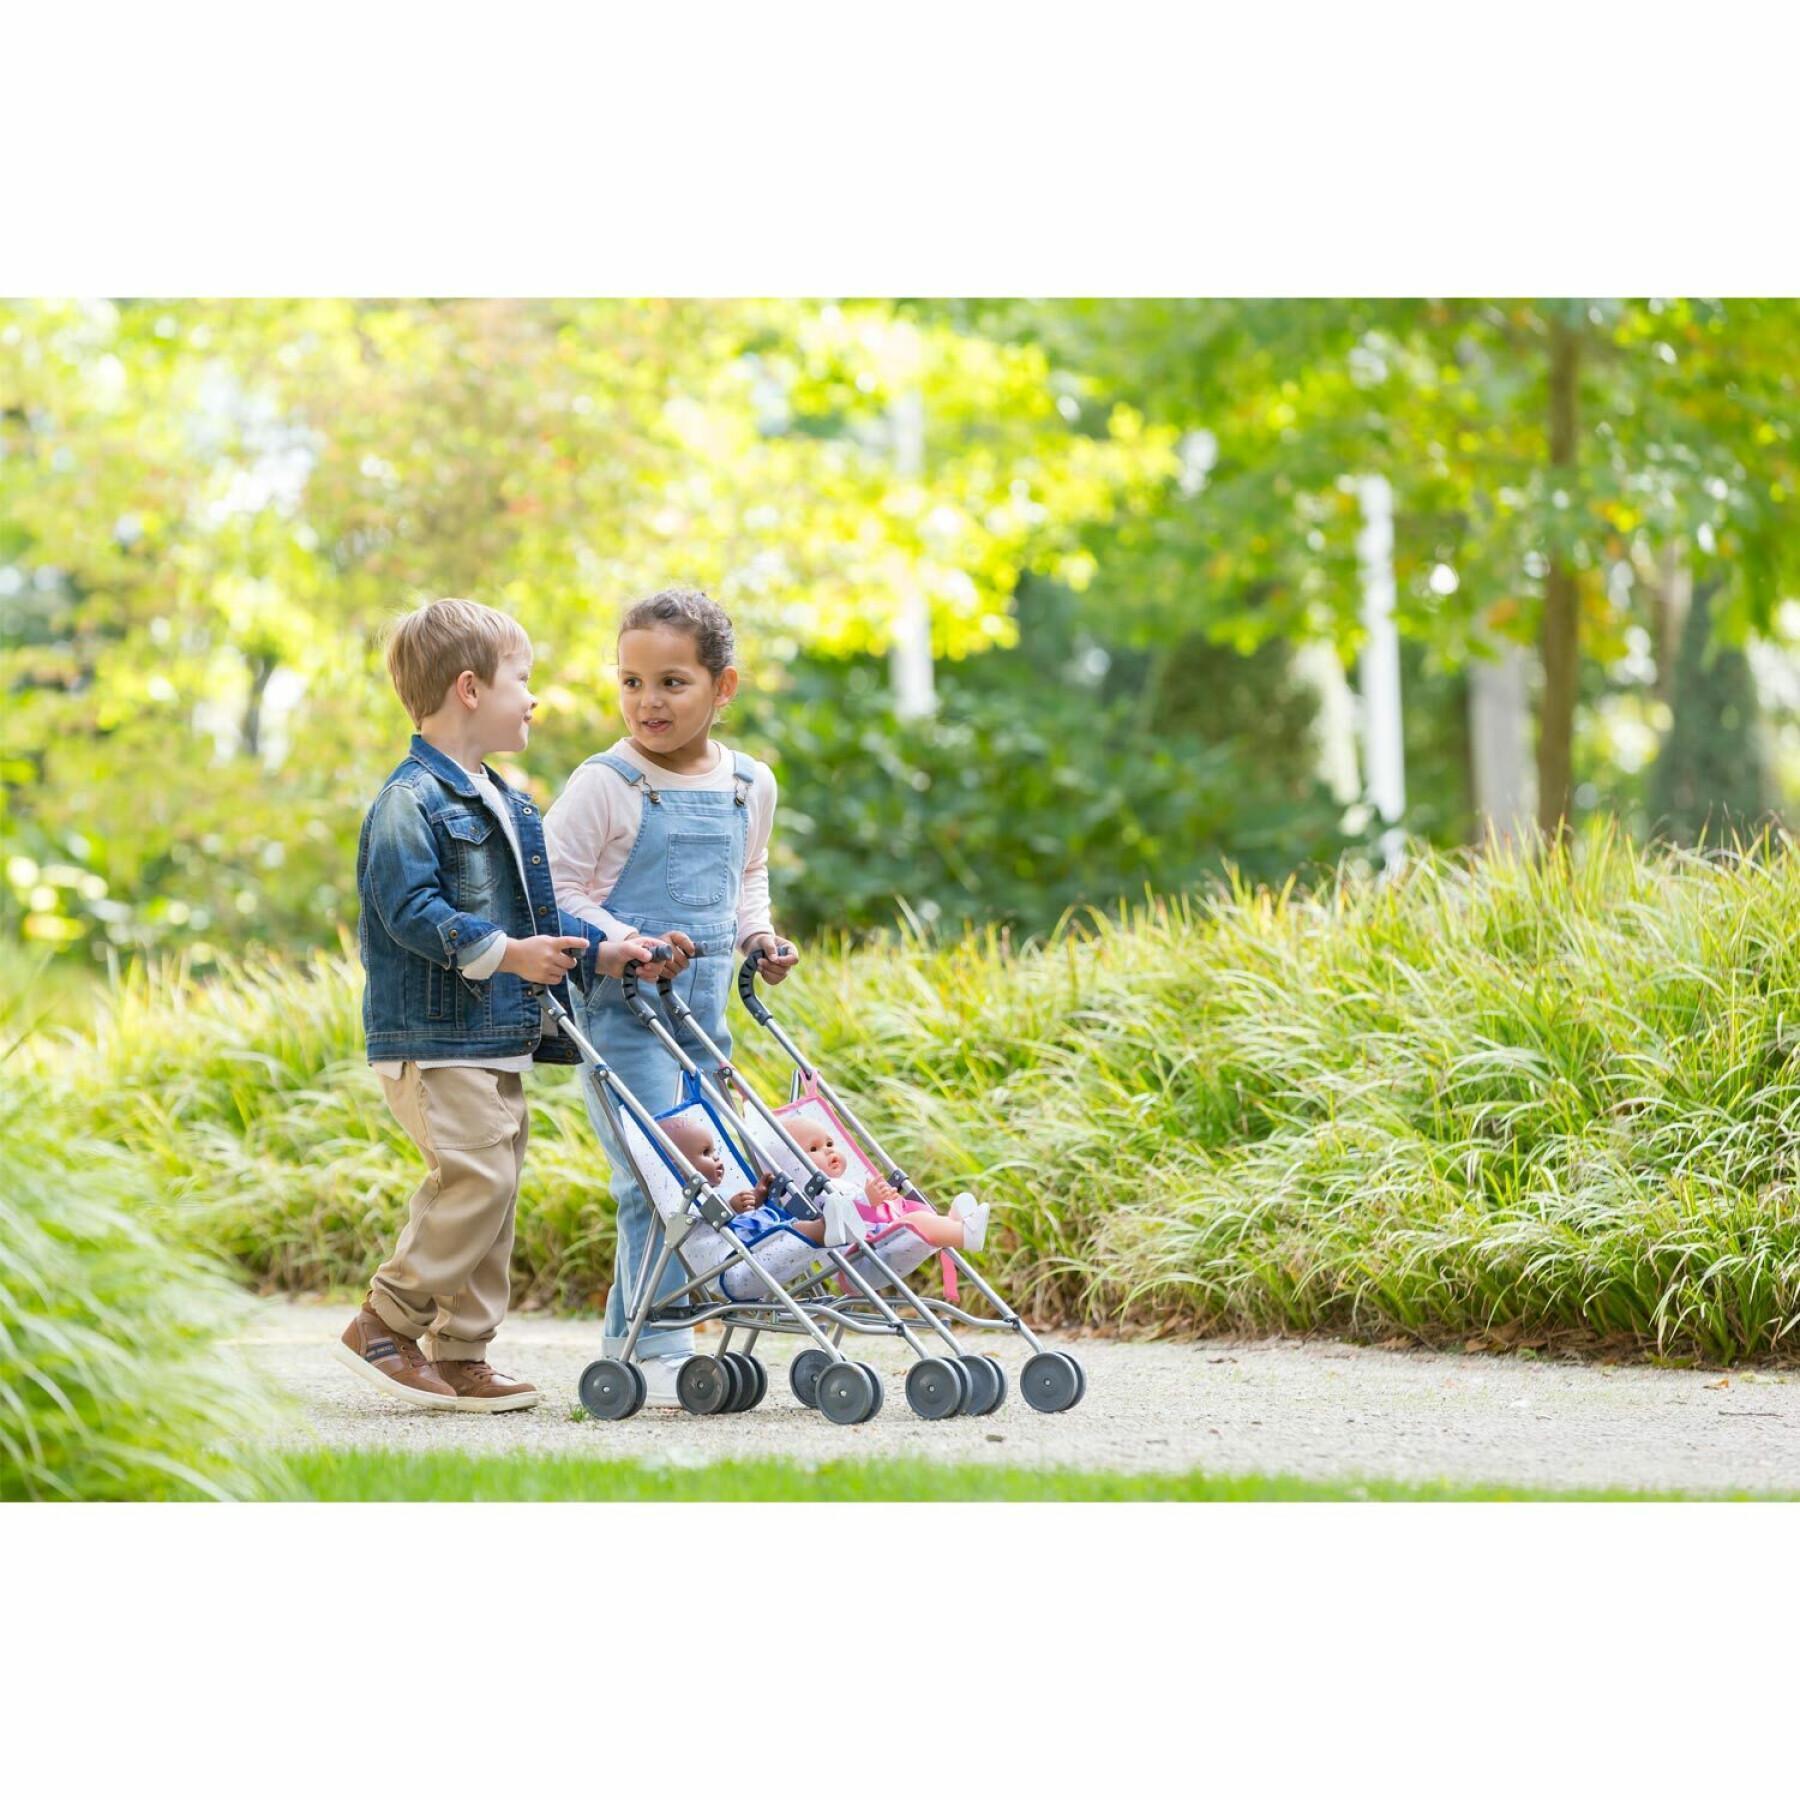 Blue cane stroller for baby Corolle